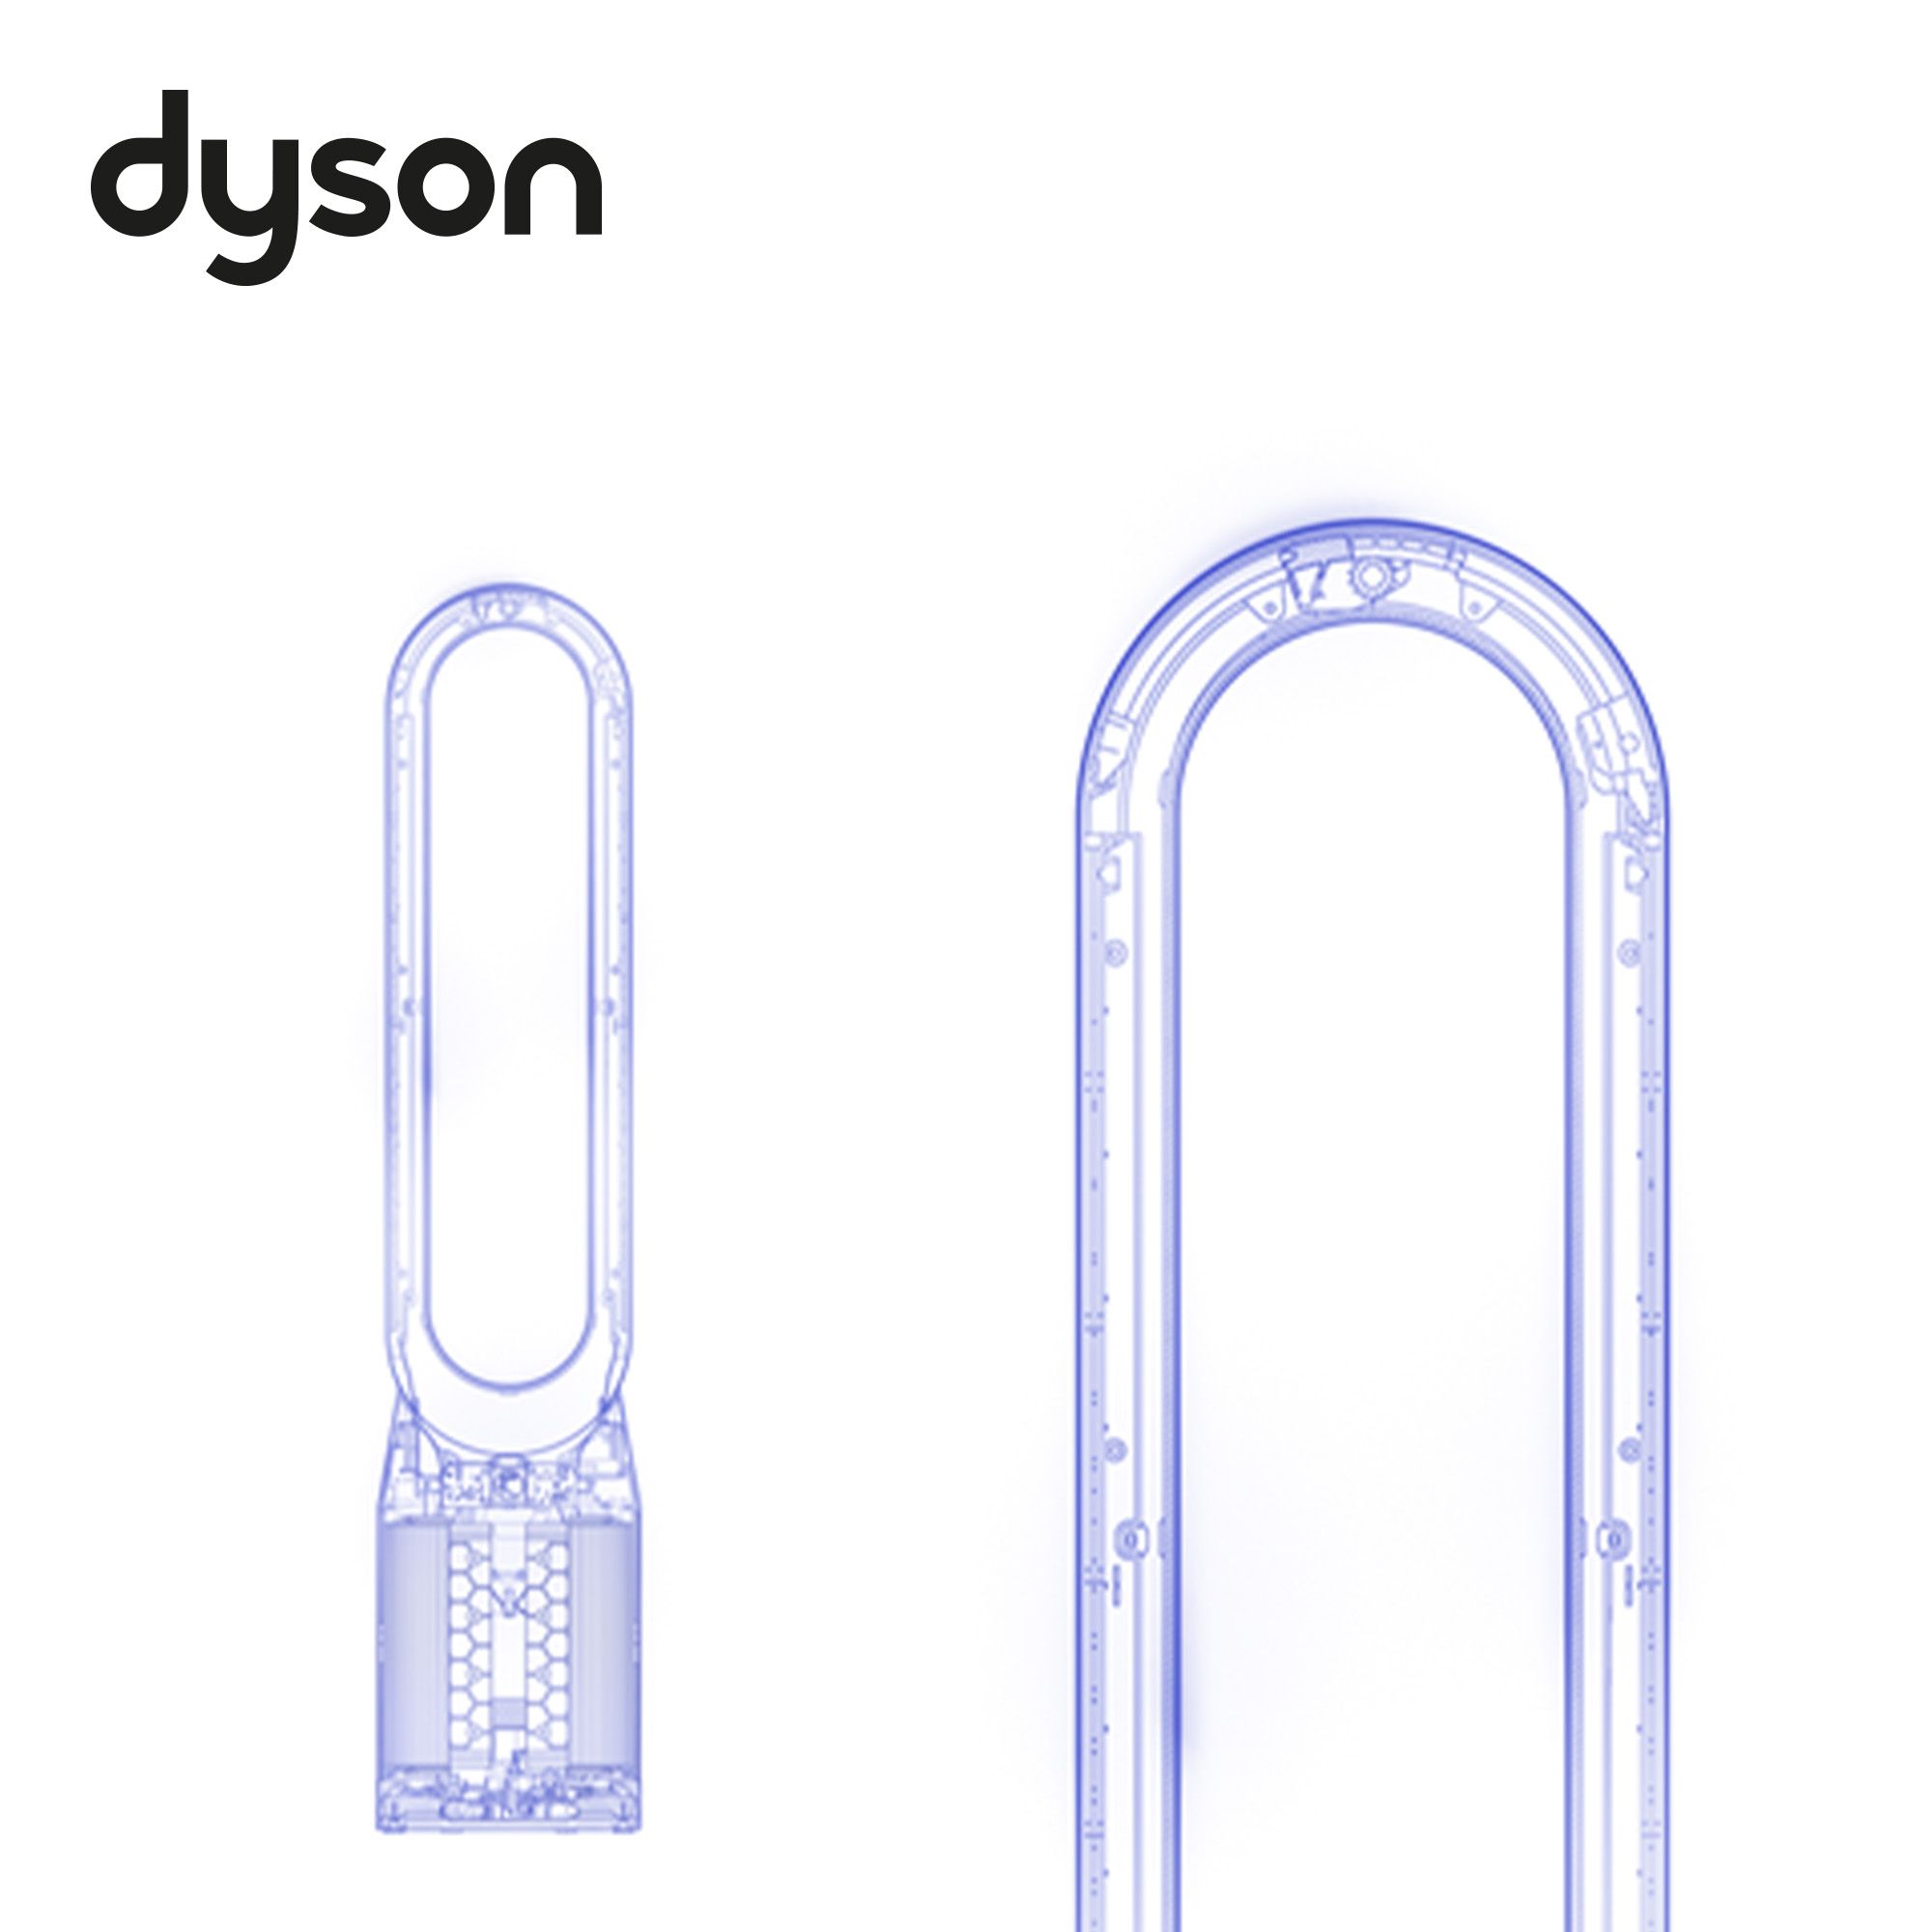 Blueprint image of a Dyson heater